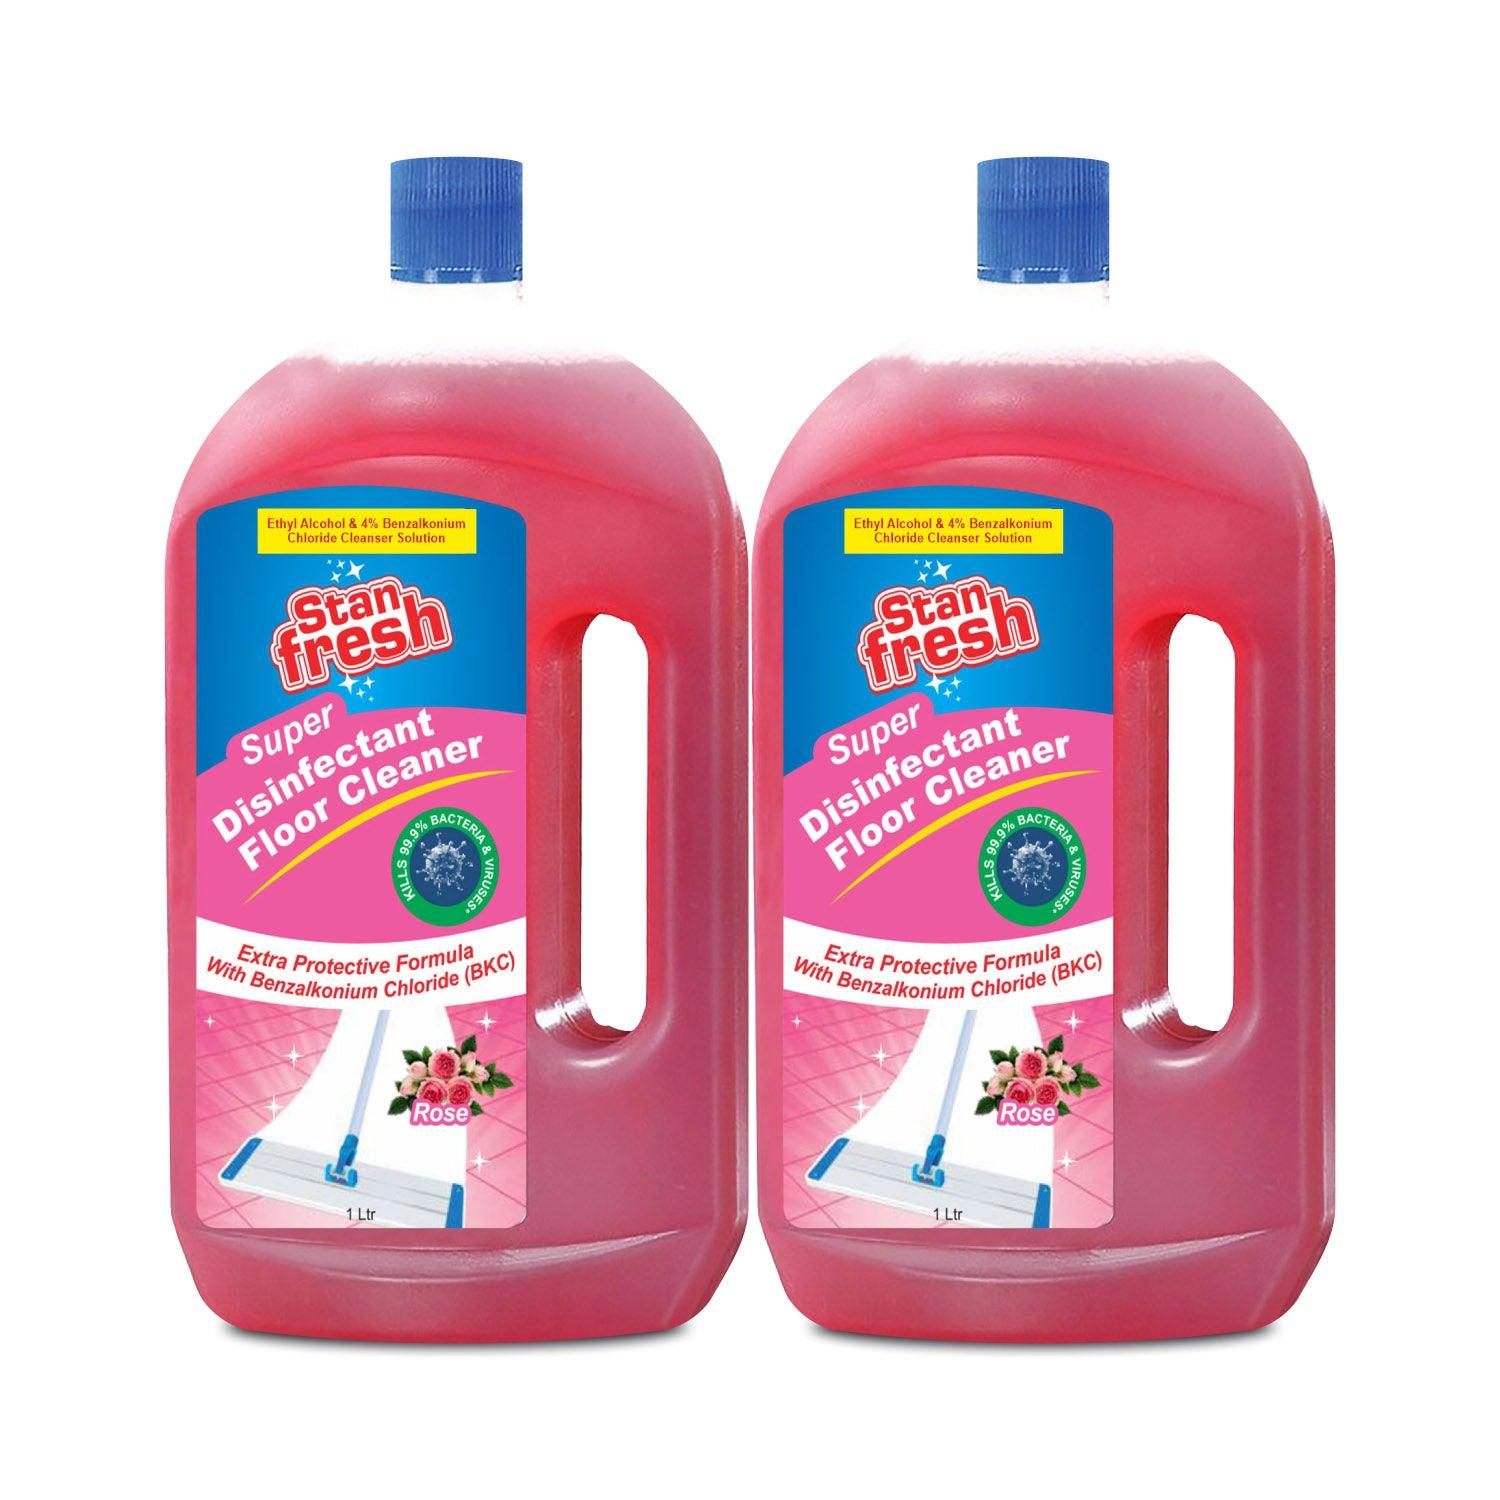 Buy Fresh Cleaner Disinfectant Floor Cleaner Premium Quality 1 Liter online  @  - School & Office Supplies Online India